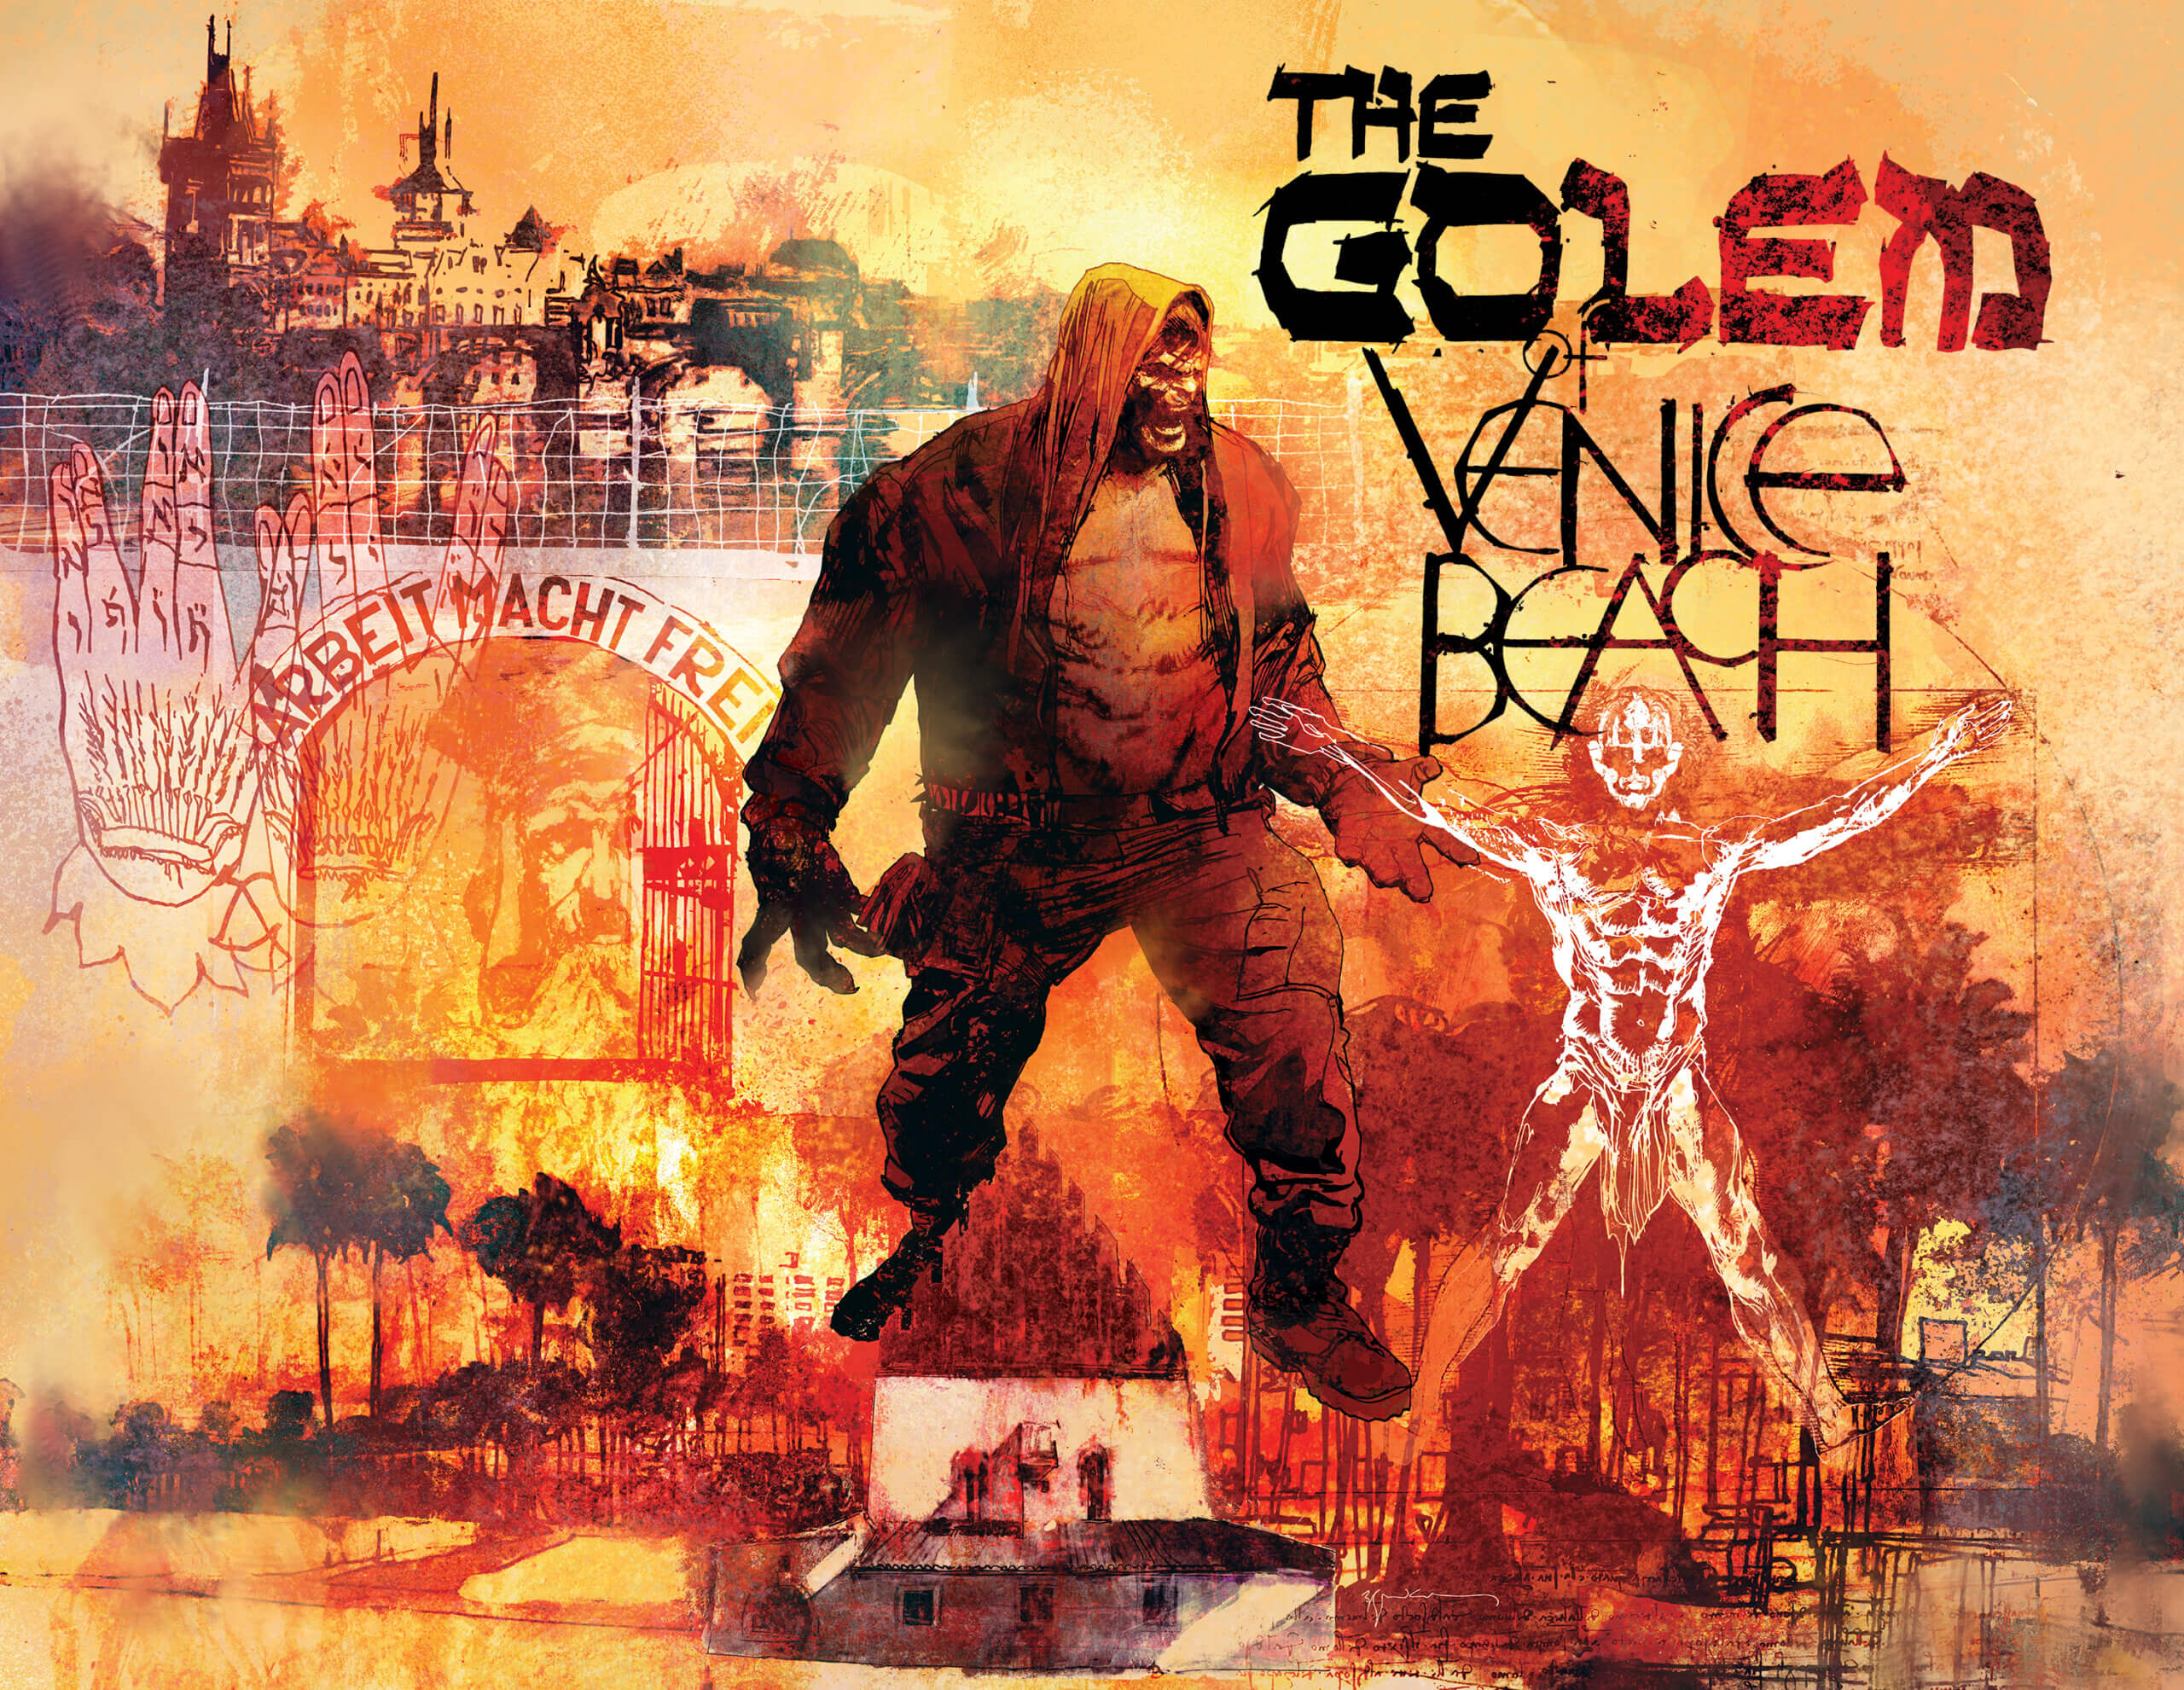 Cover of The Golem of Venice Beach